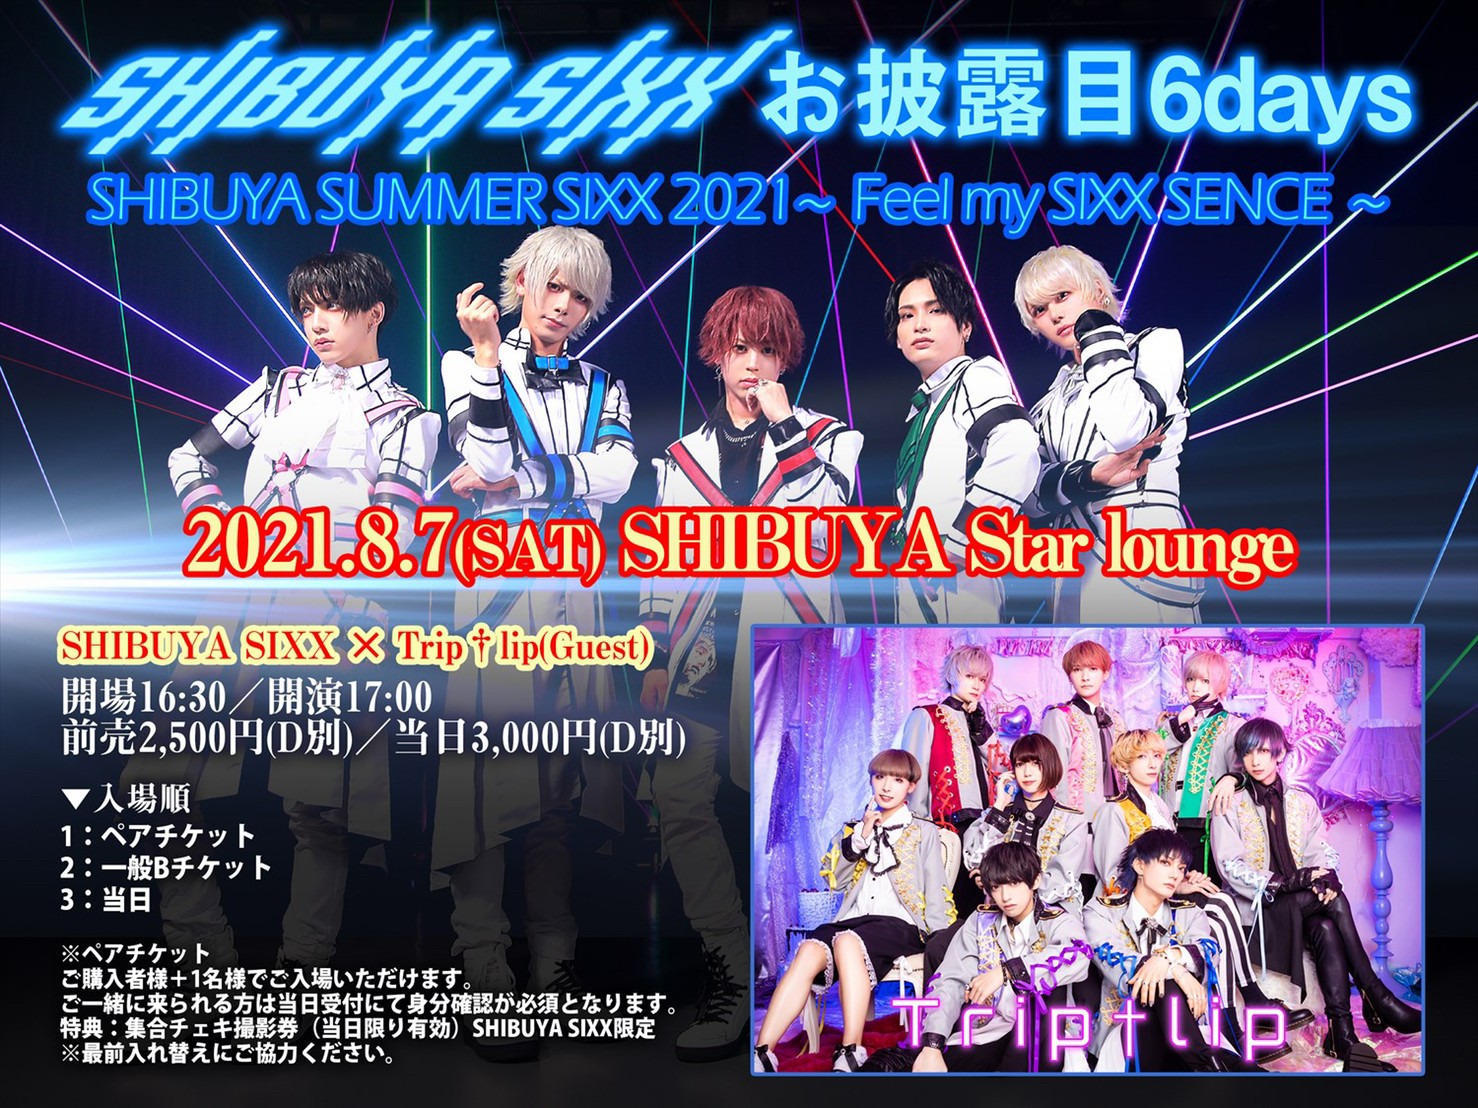 DAY:5 SHIBUYA SUMMER SIXX 2021～ Feel my SIXX SENCE ～